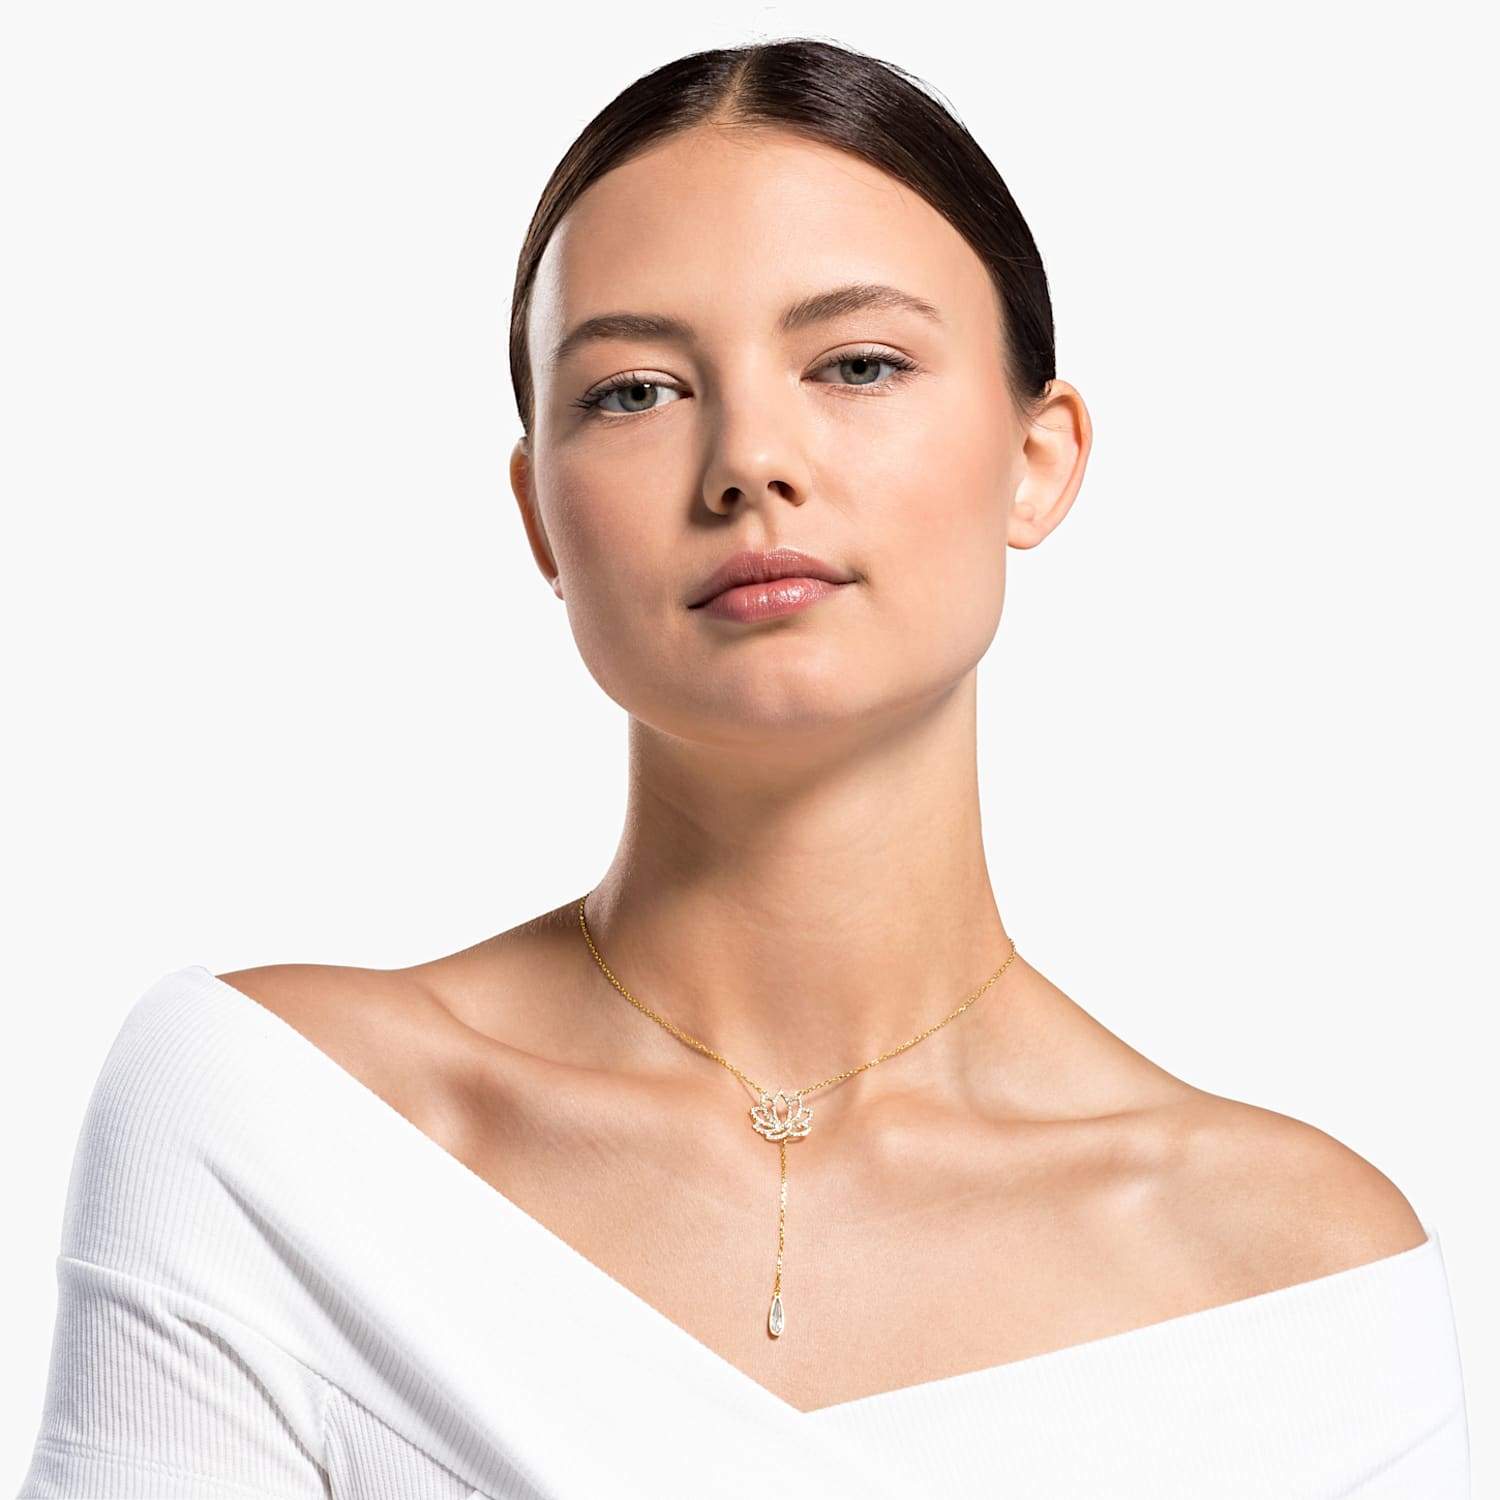 SWAROVSKI Symbolic Lotus Necklace - White & Gold-tone Plated #5521346